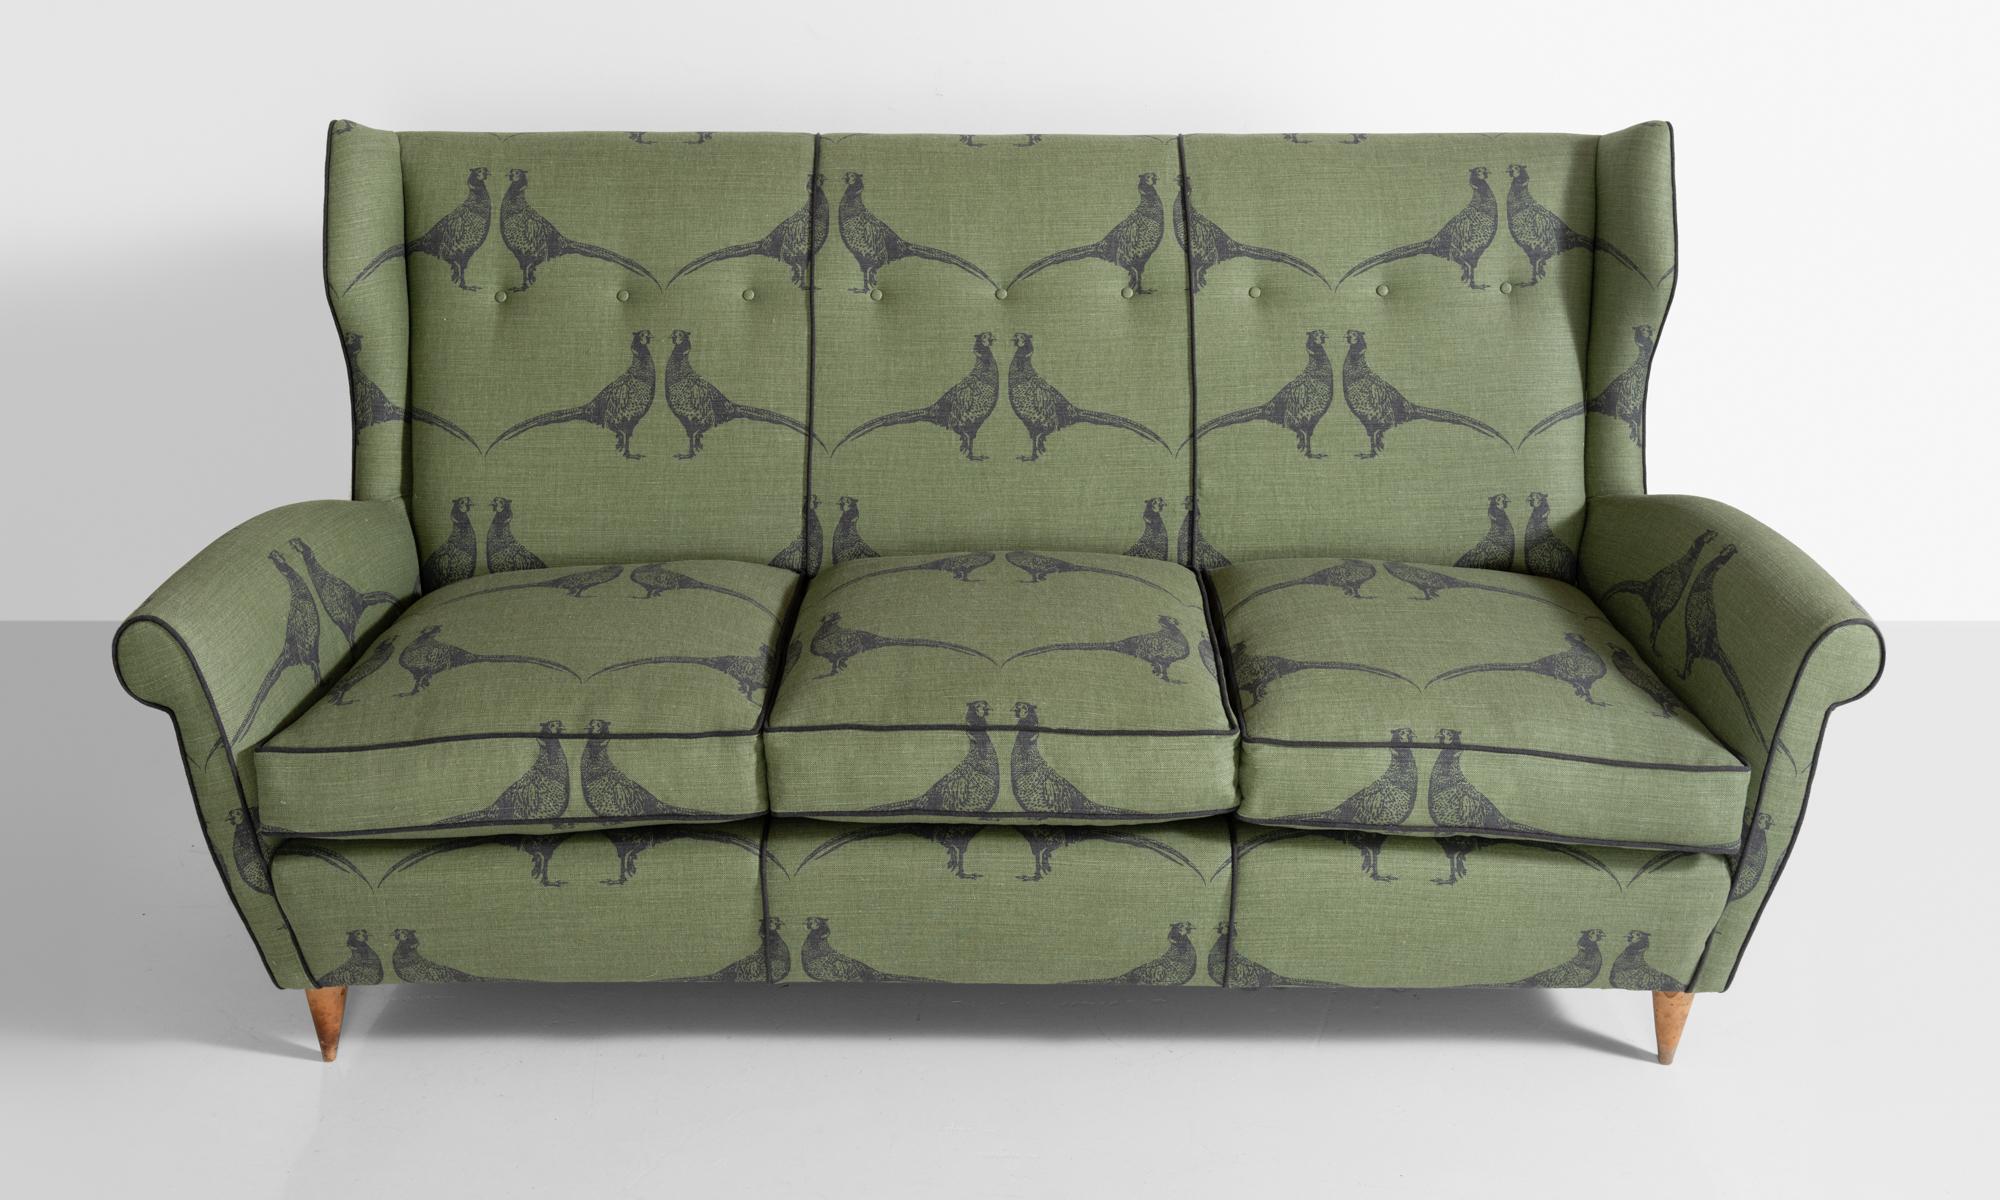 Modern linen settee, England, circa 1950

Newly reupholstered in green linen with pheasant motif.